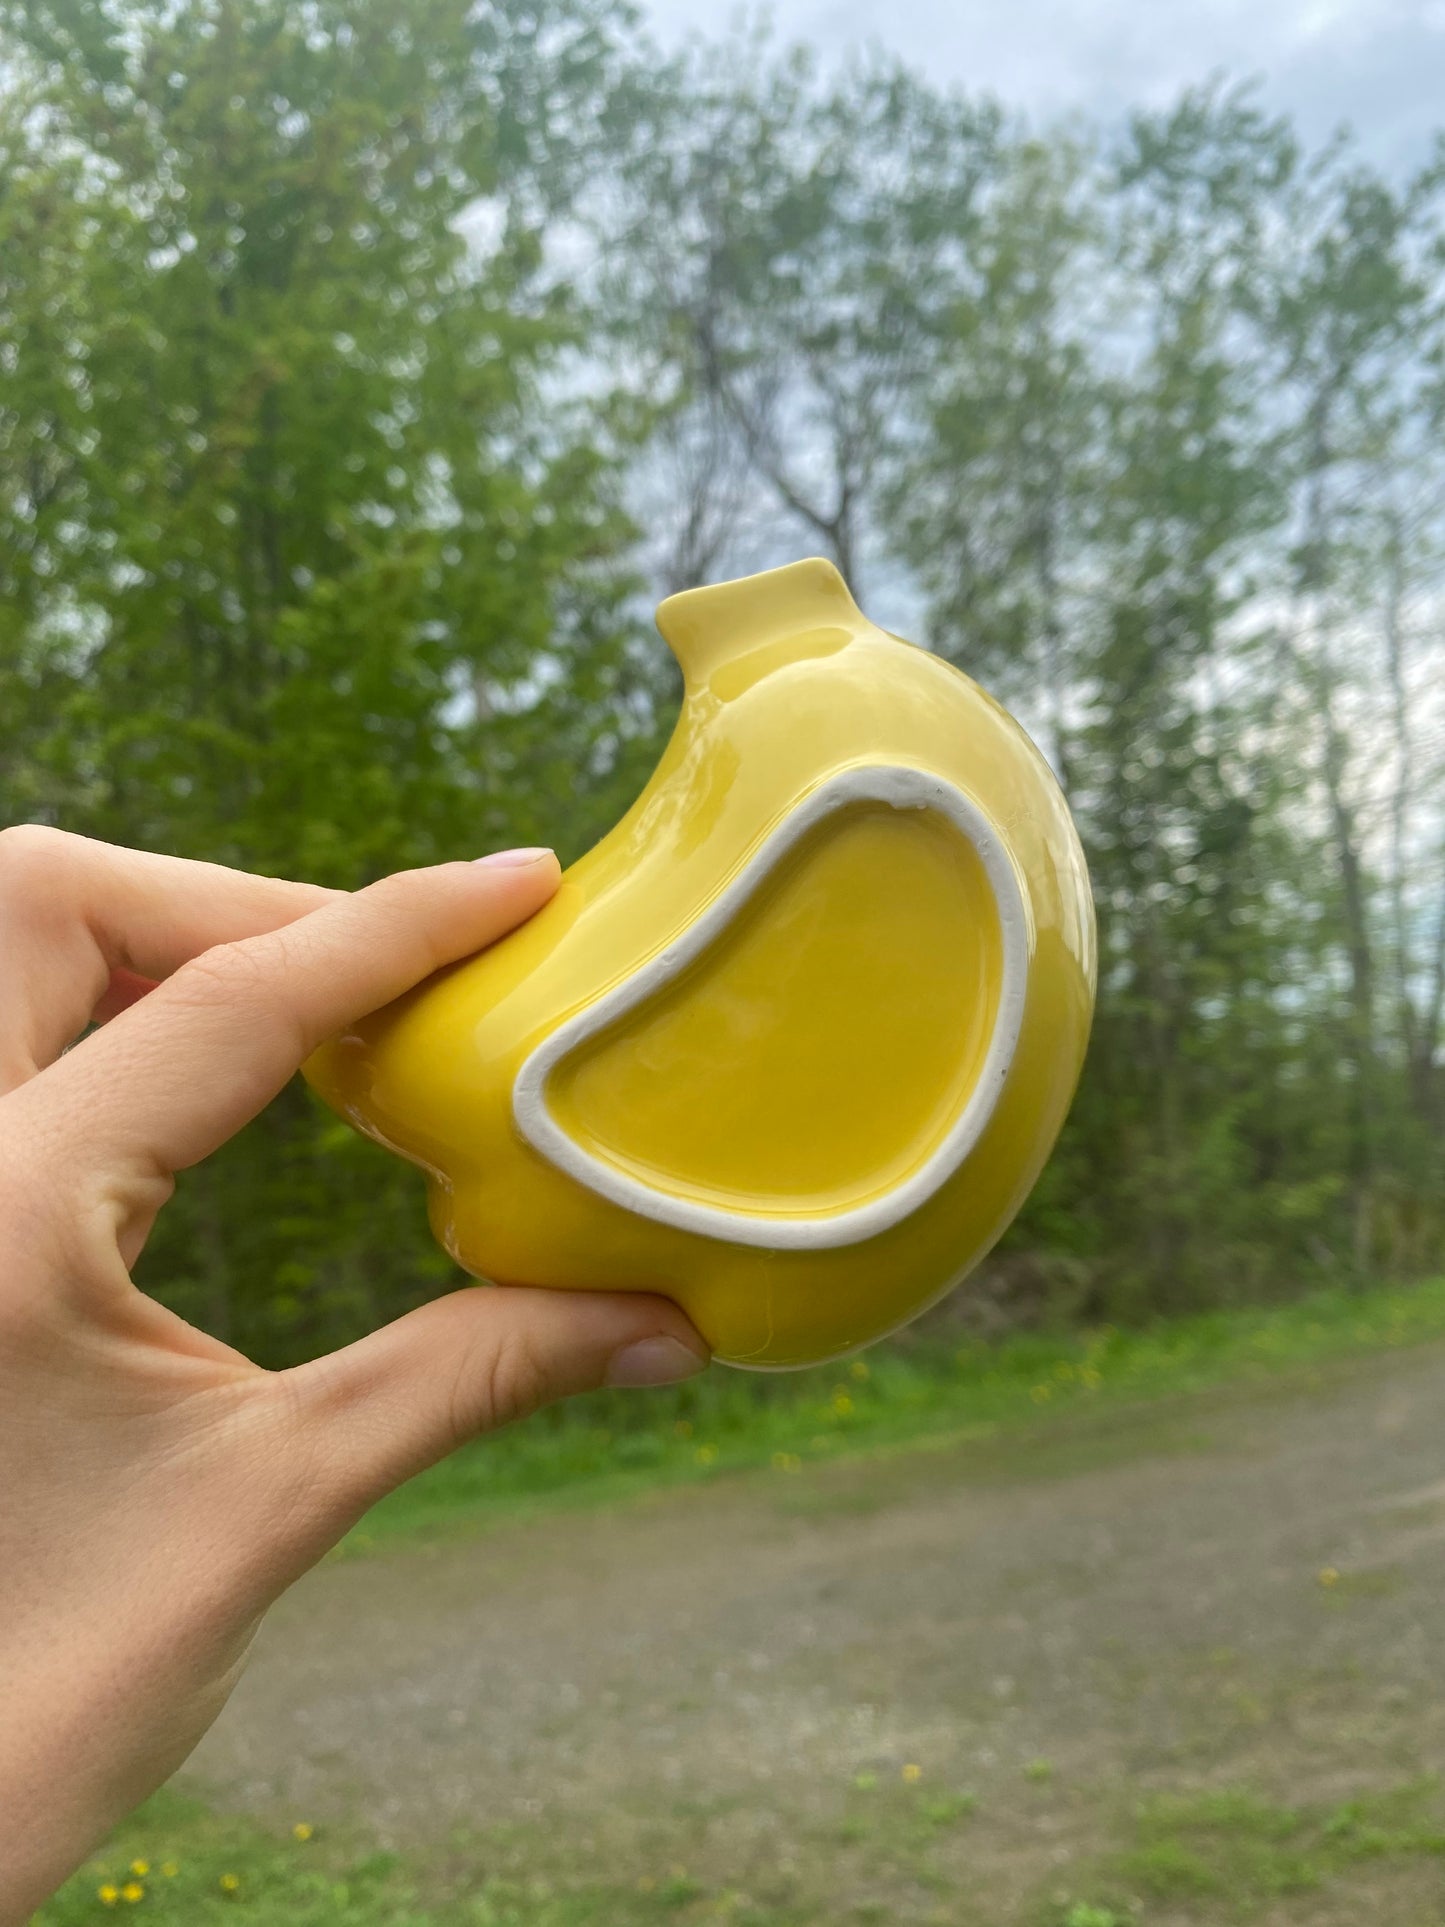 Banana shaped bowl - painted by hand